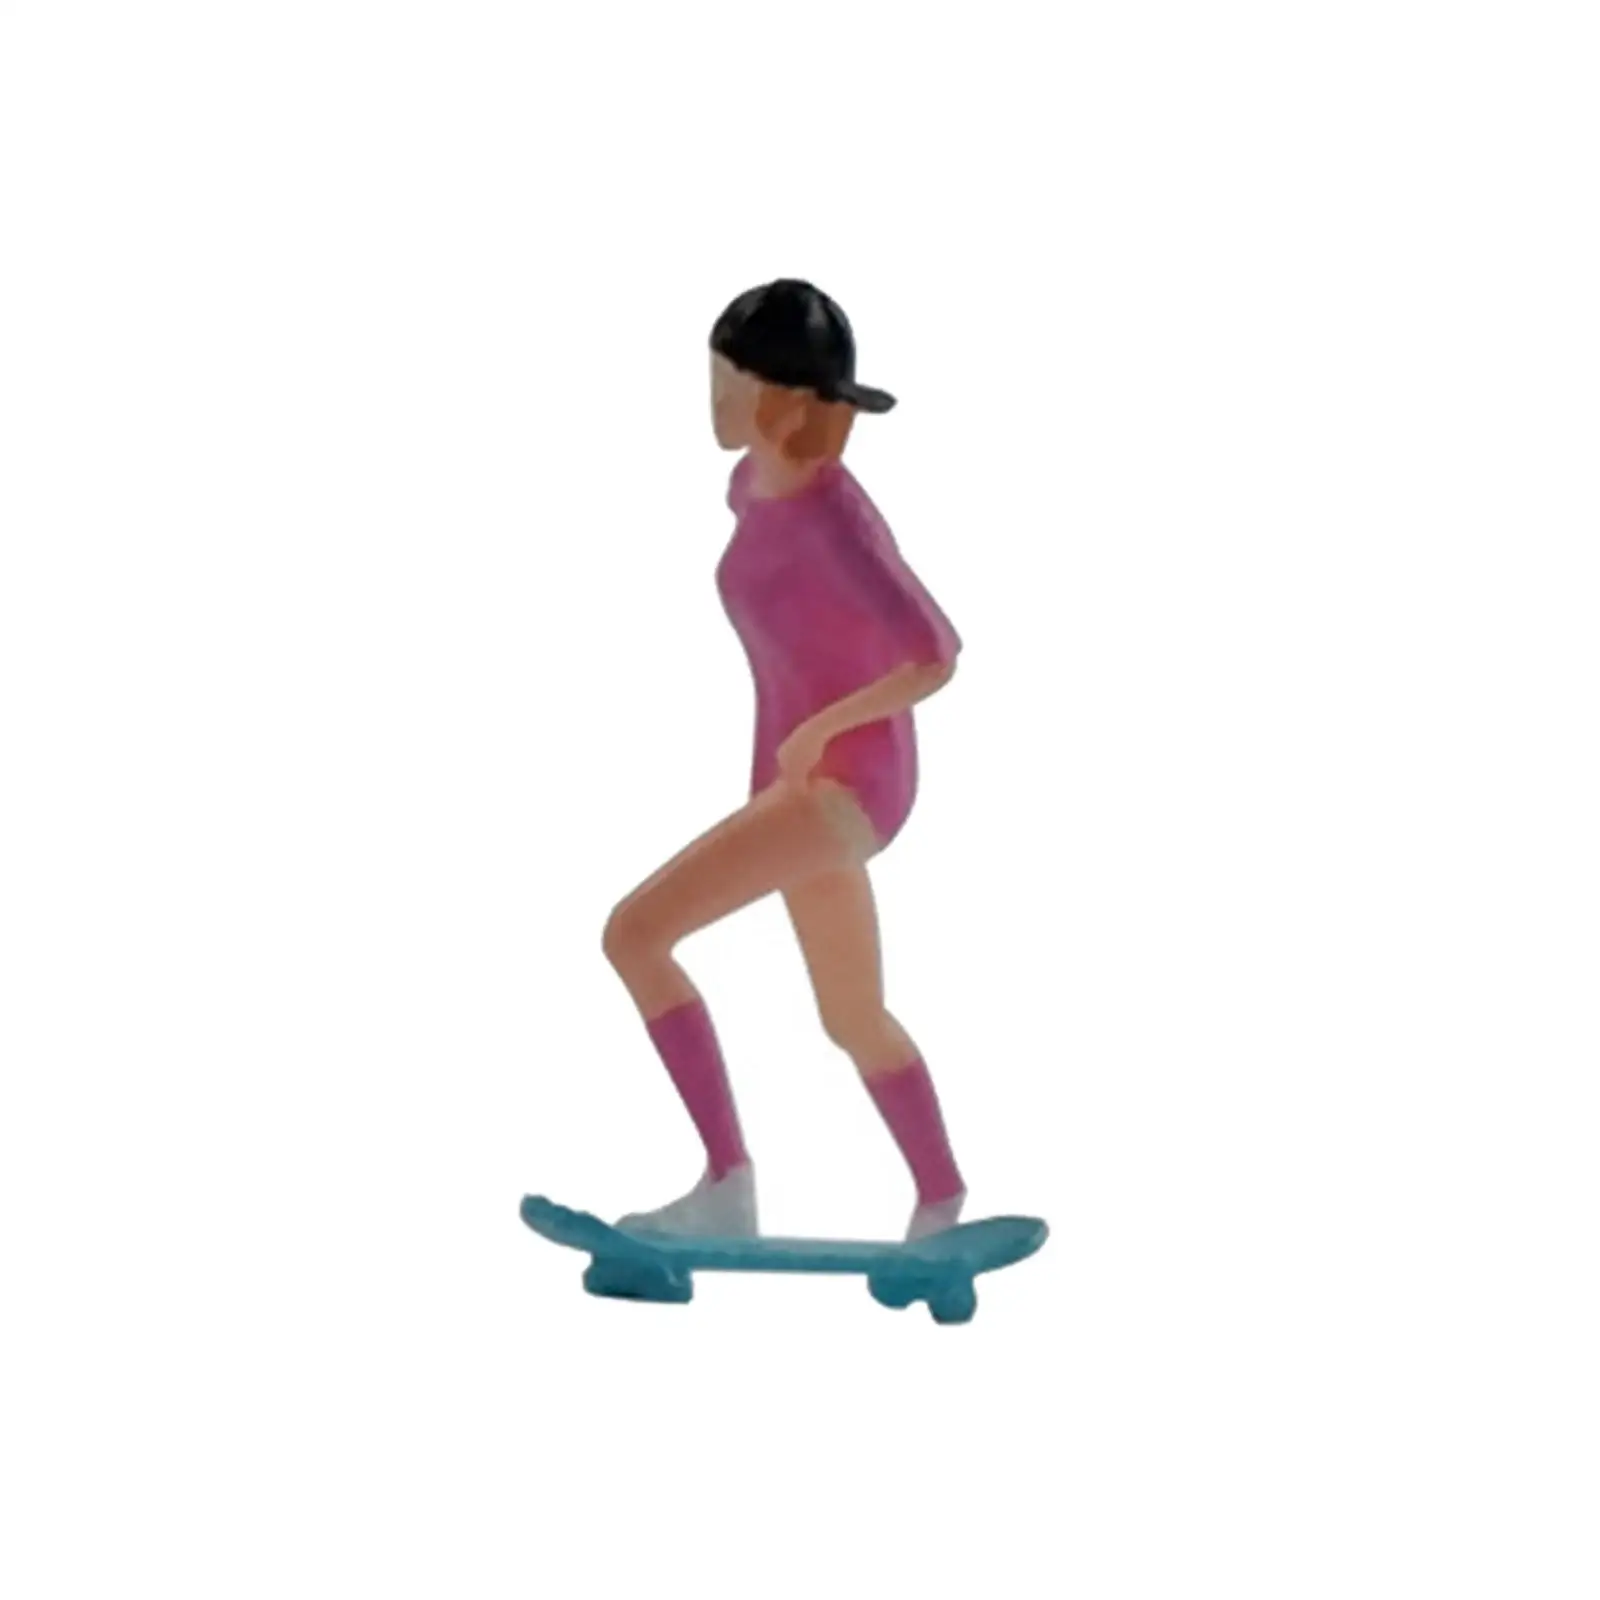 Realistic 1:64 Scale Figures Skateboard Girl Miniature Scenes People for Diorama